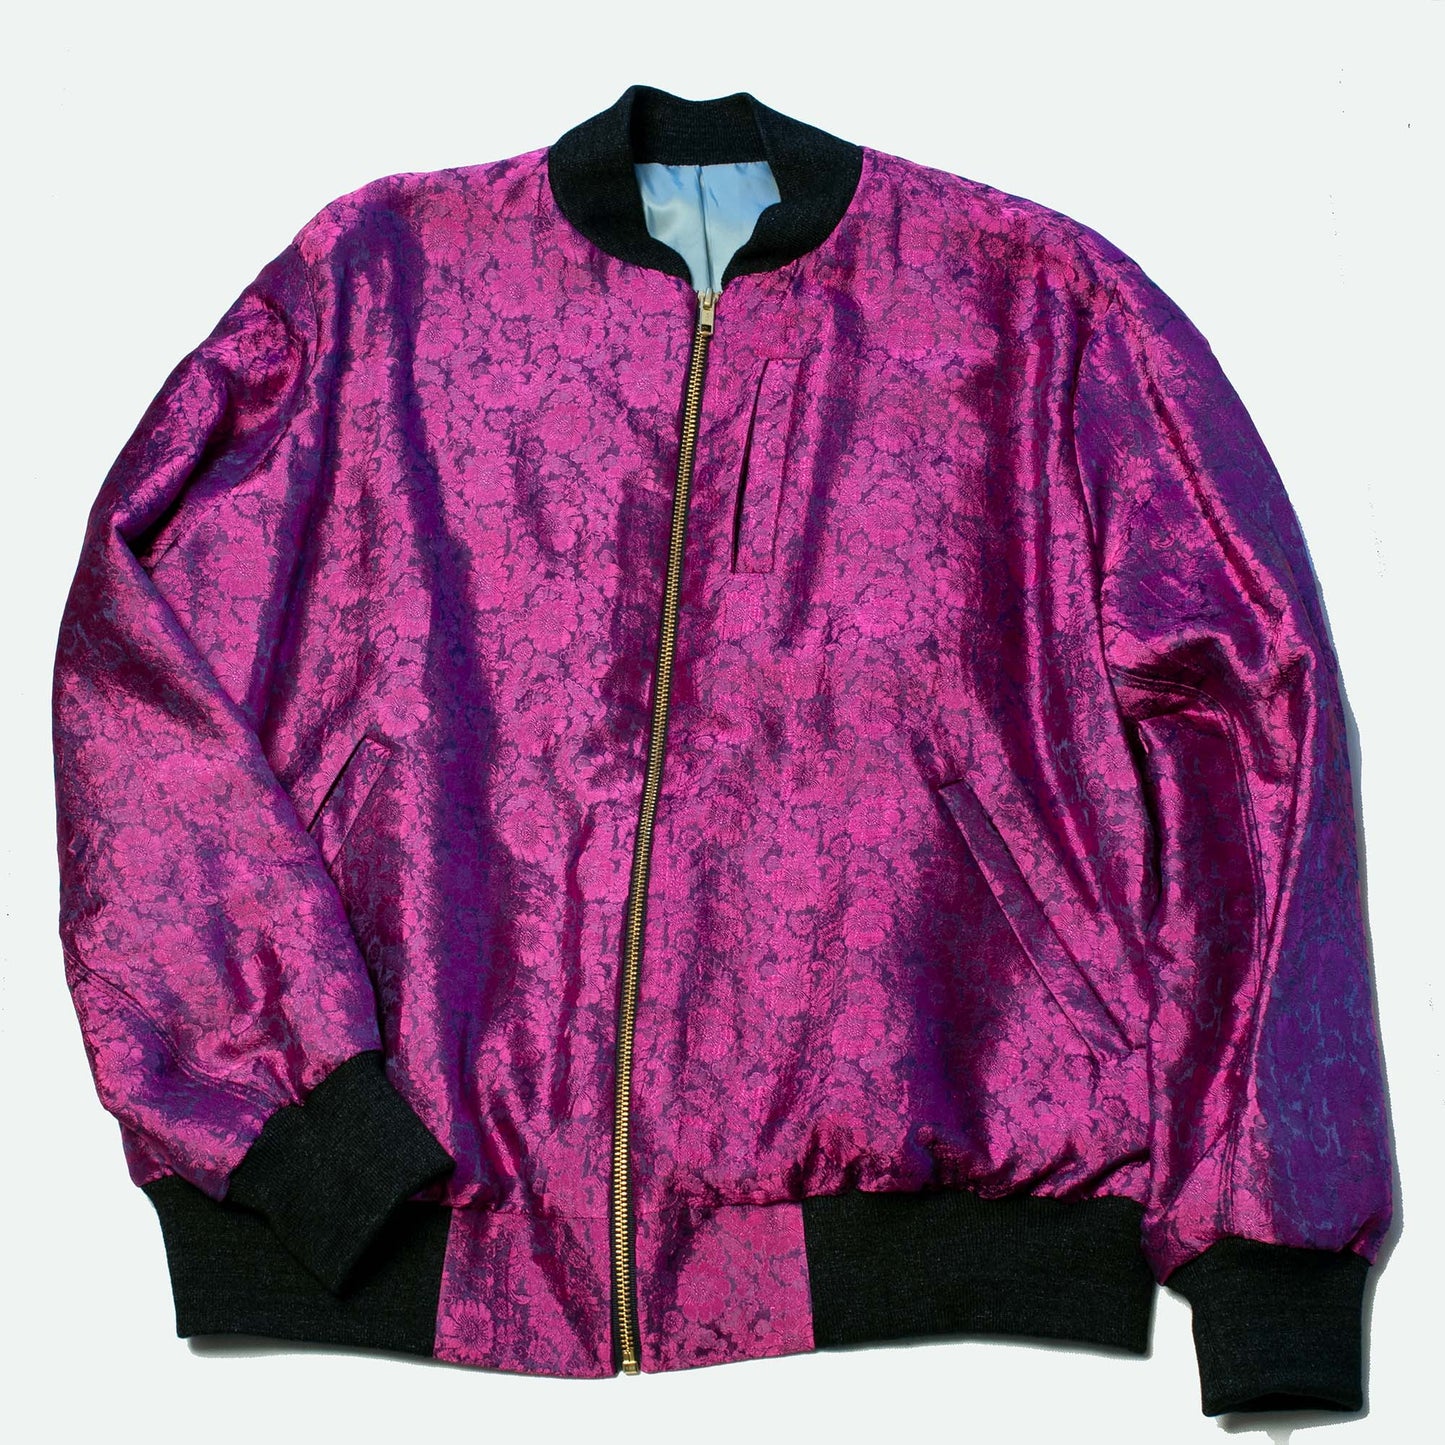 Bomber Jacket in Iridescent Pink Floral Brocade Silk